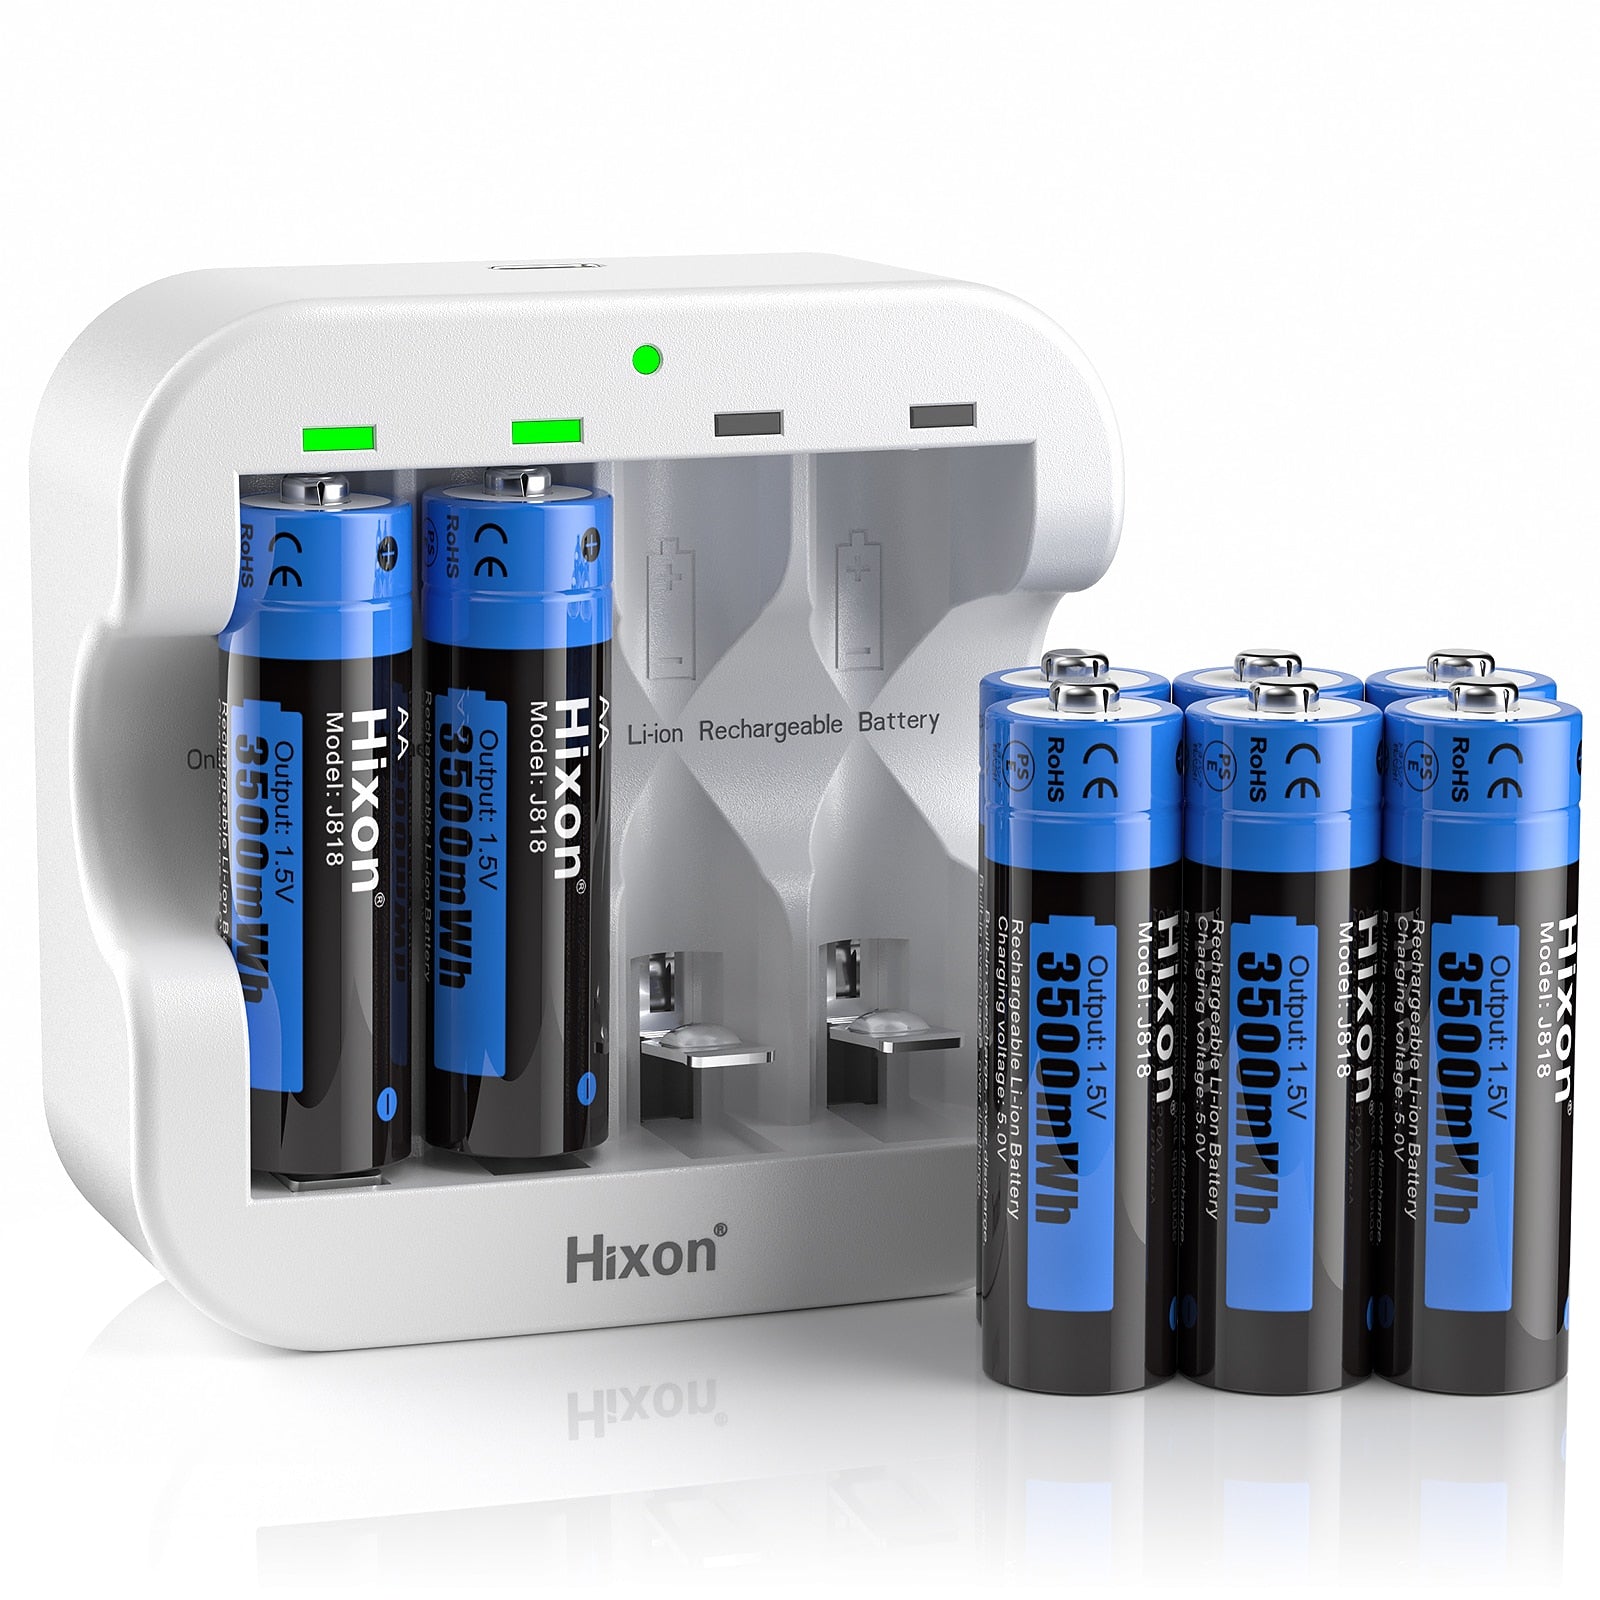 Lithium Rechargeable Battery 4 Slot Charger - phoenixfitnessworld